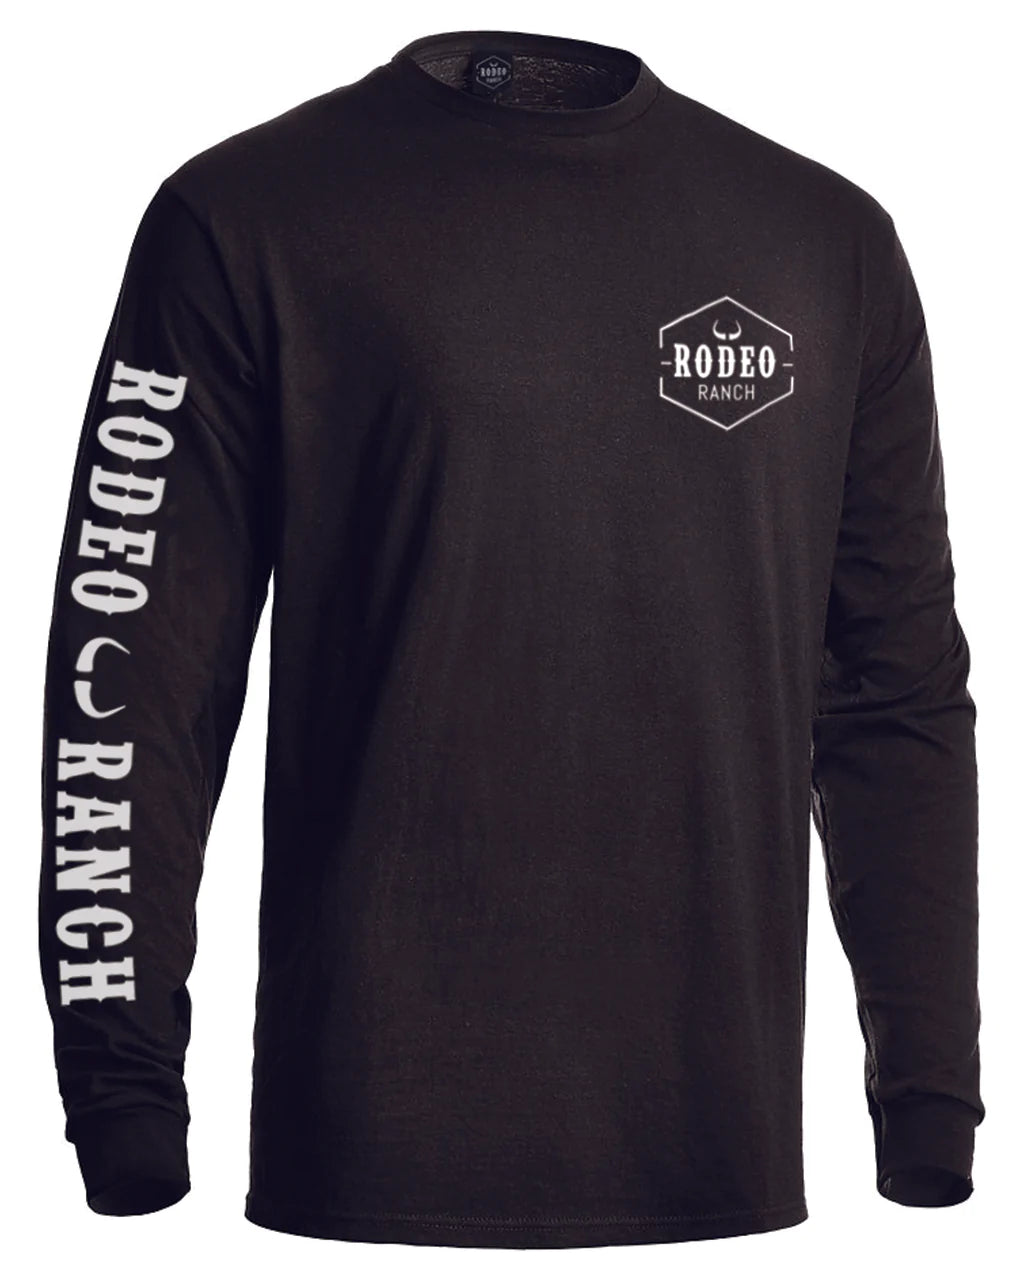 Rodeo Ranch Branding Logo Long Sleeve Shirt - Solid Black